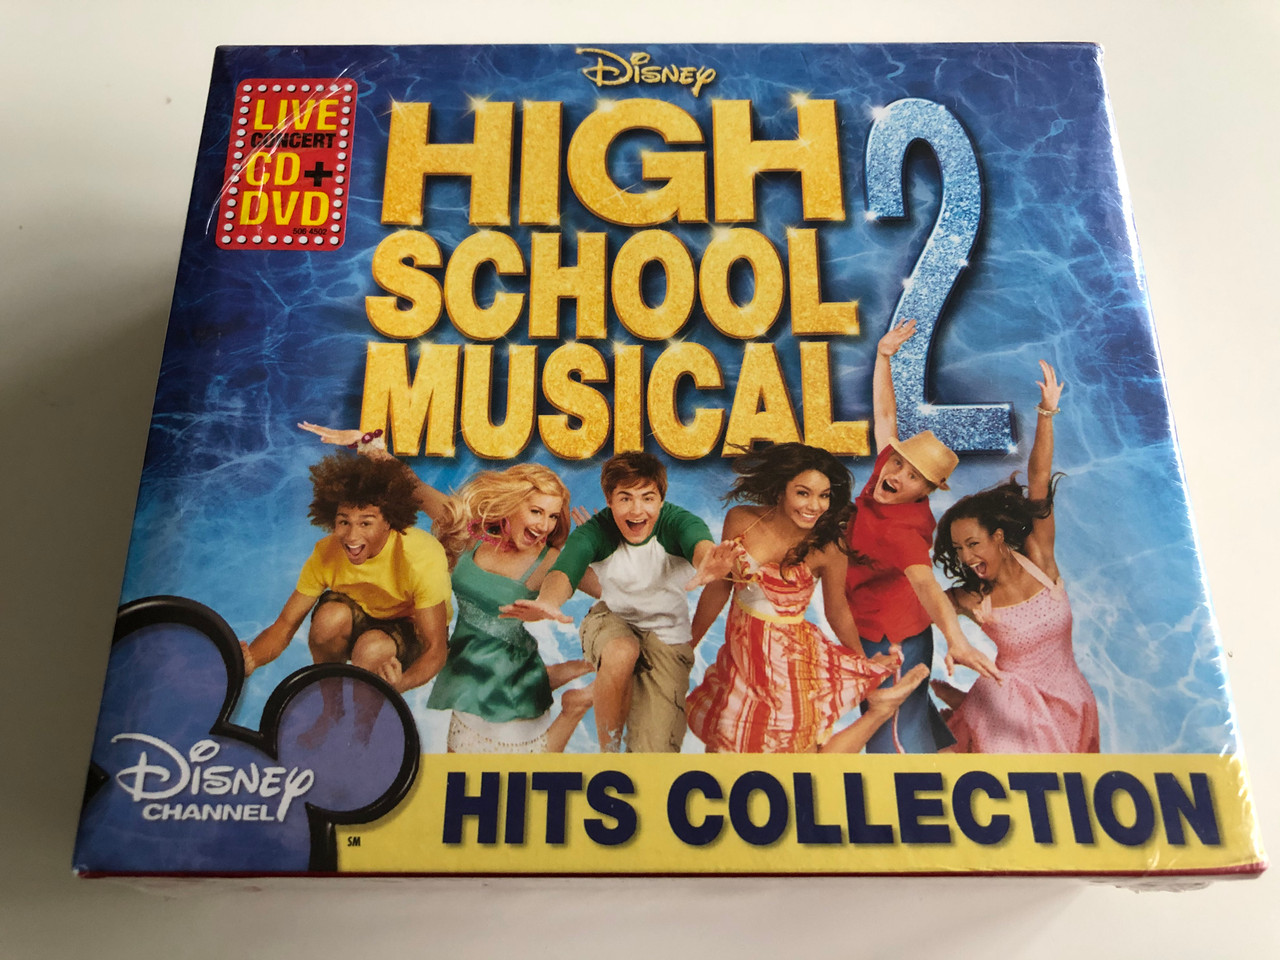 High School Musical - Collection / Disney Channel / Walt Disney Records Box Set 5x Audio CD 2007 / 5099951483326 - bibleinmylanguage